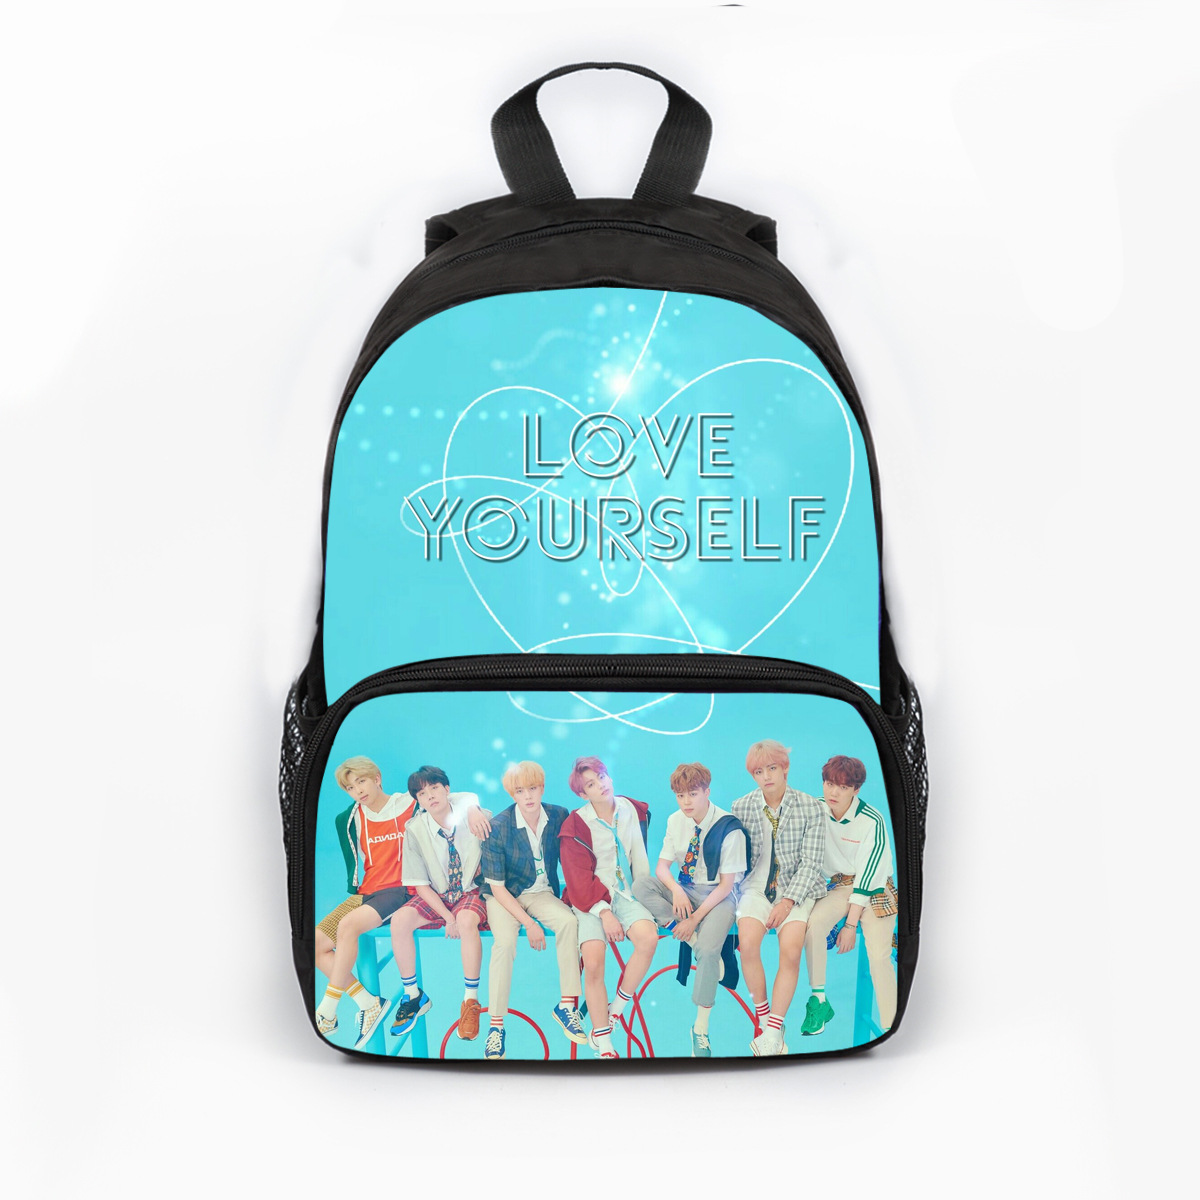 Bts Backpack Cute Usb Charging School Bag